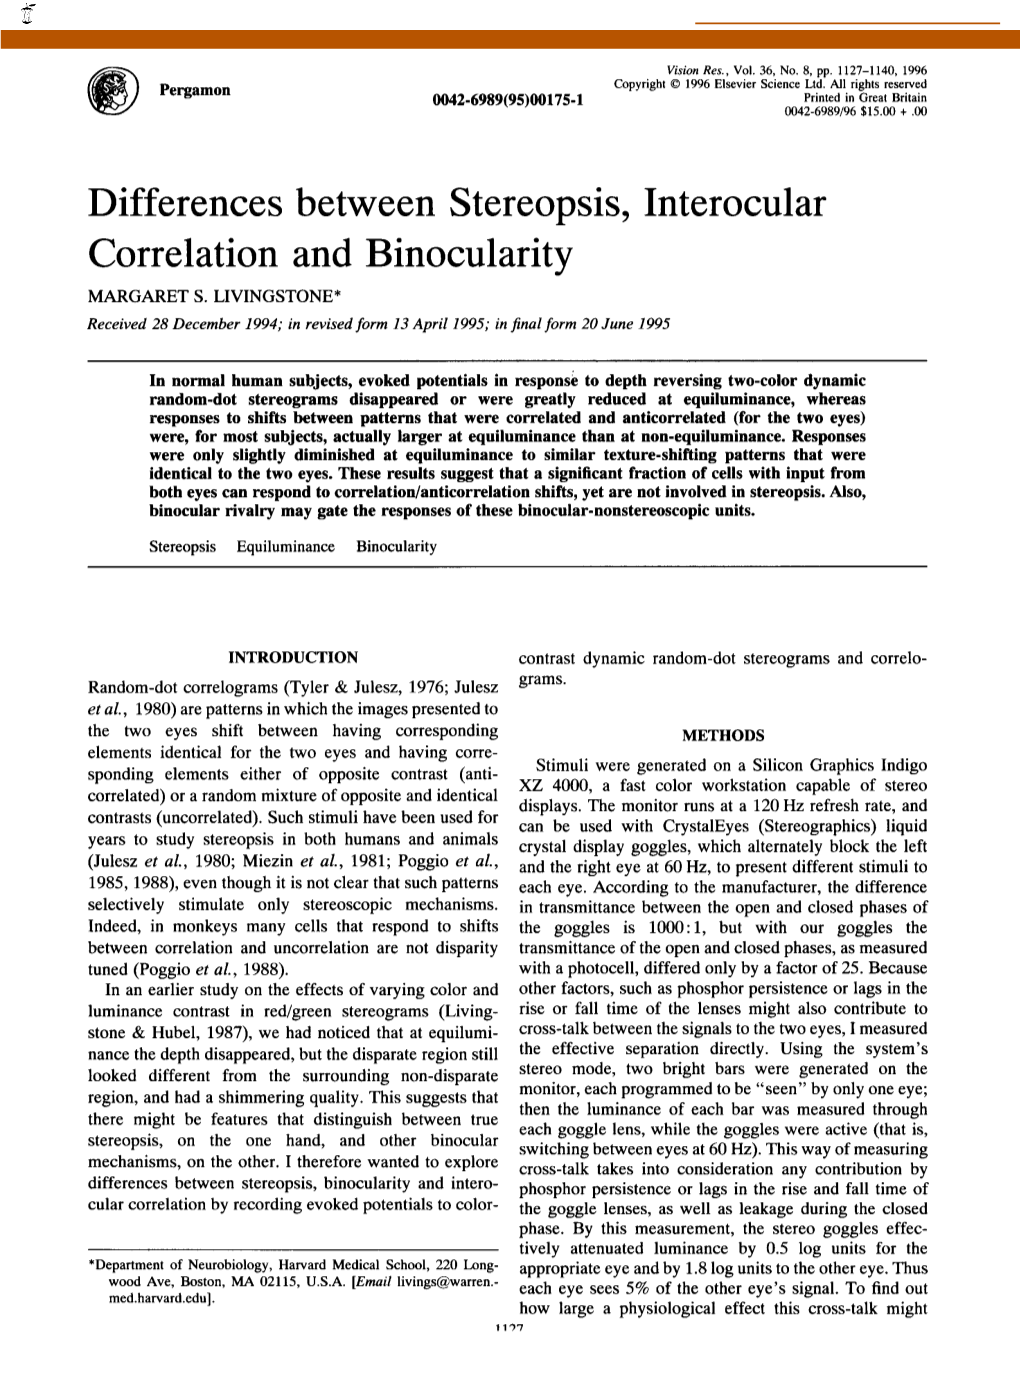 Differences Between Stereopsis, Interocular Correlation and Binocularity MARGARET S